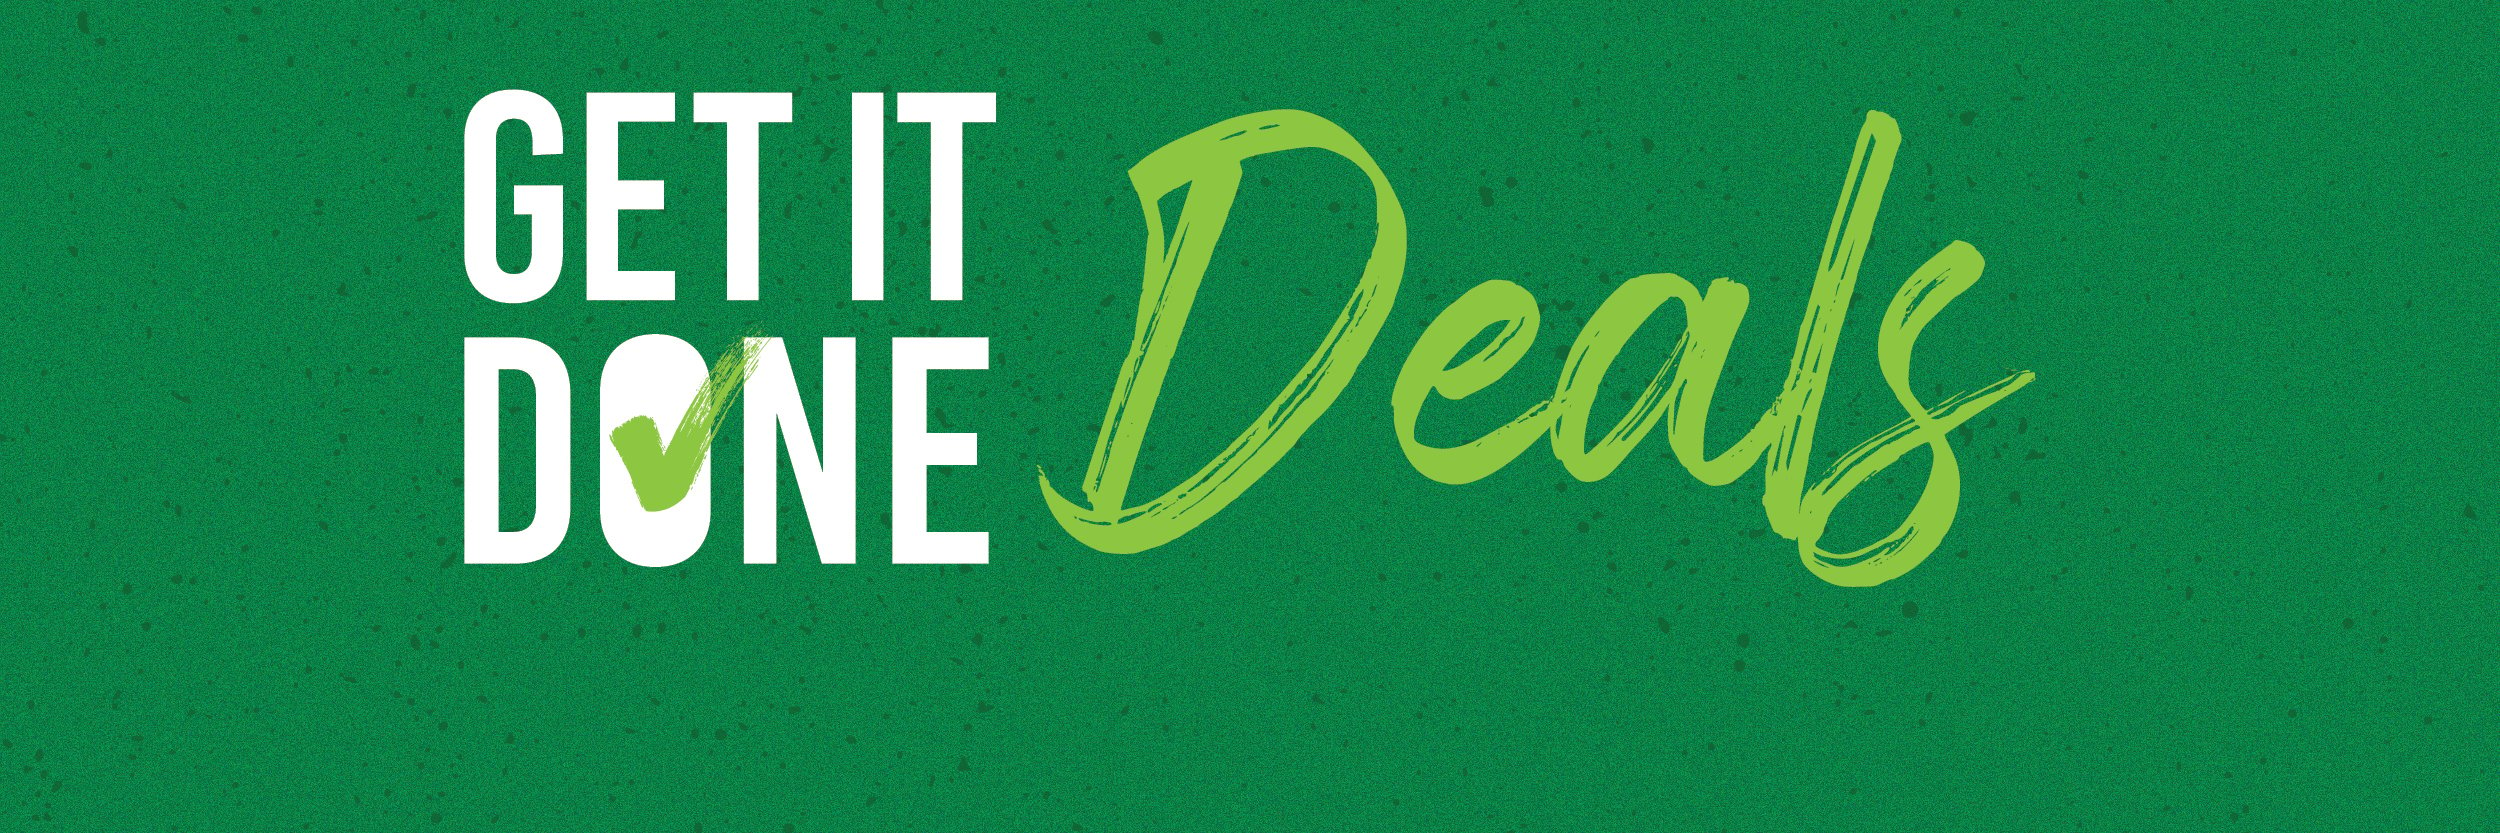 Get It Done Deals Homepage Banner